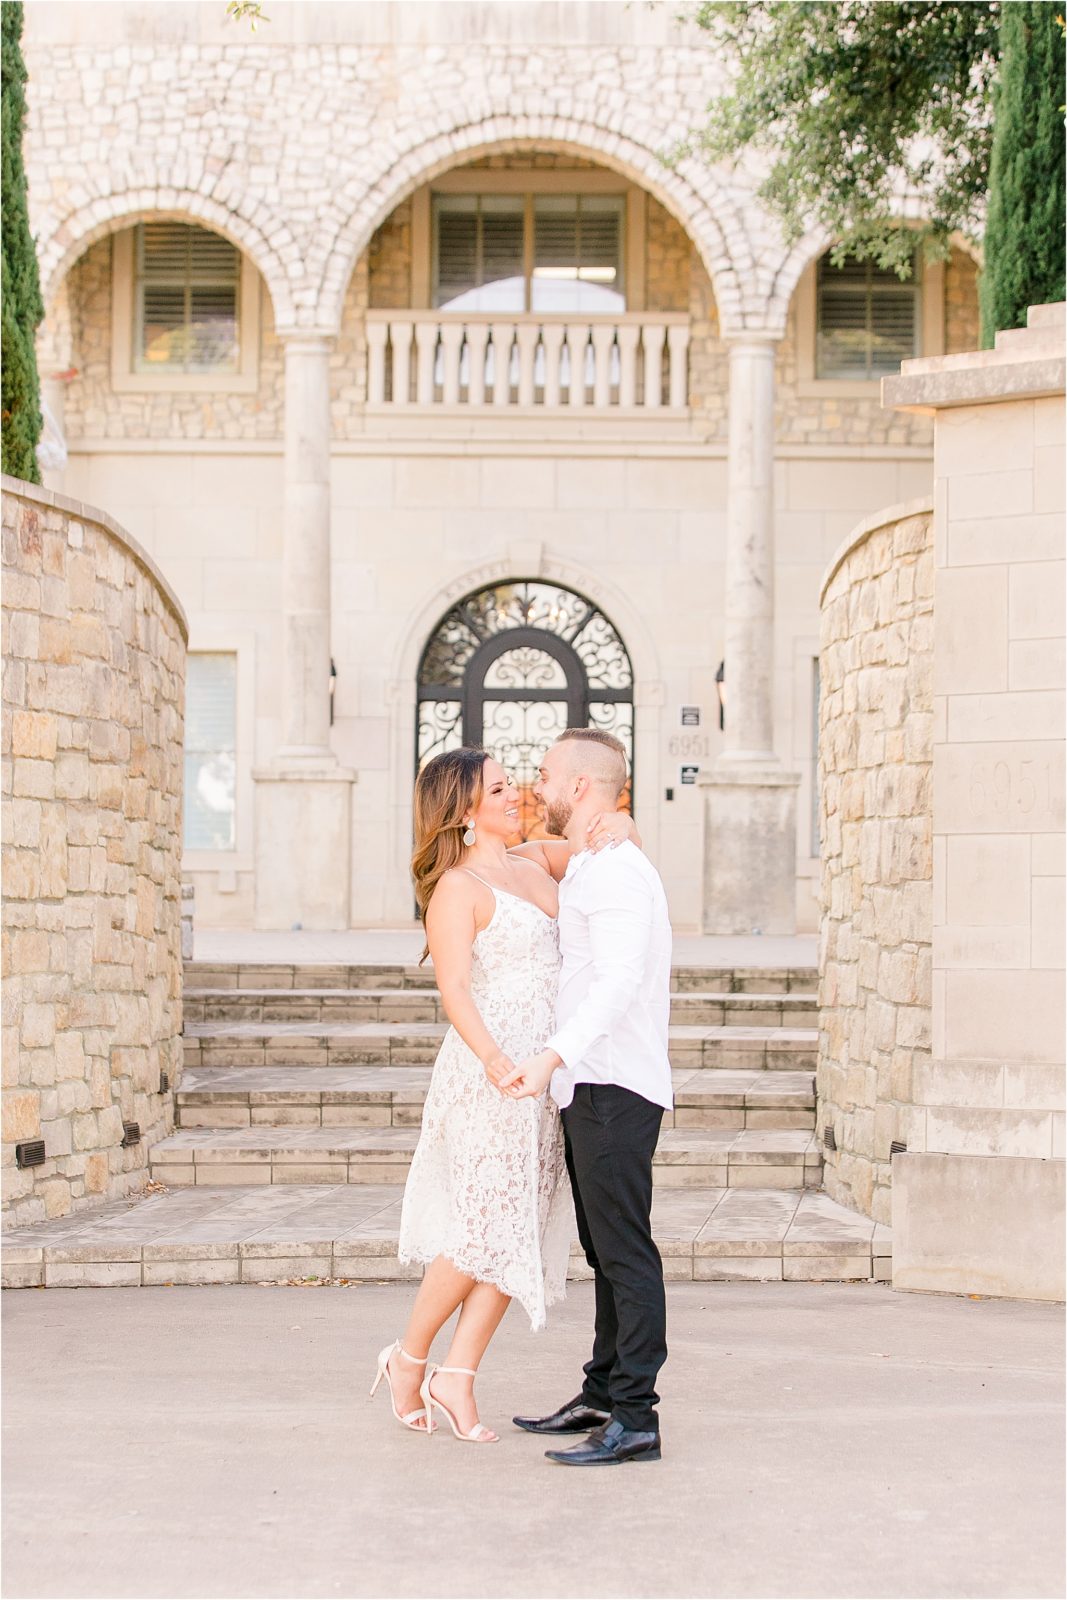 Romantic DFW Engagement Session at Adriatica in McKinney, Texas by Dallas Wedding Photographer Jillian Hogan